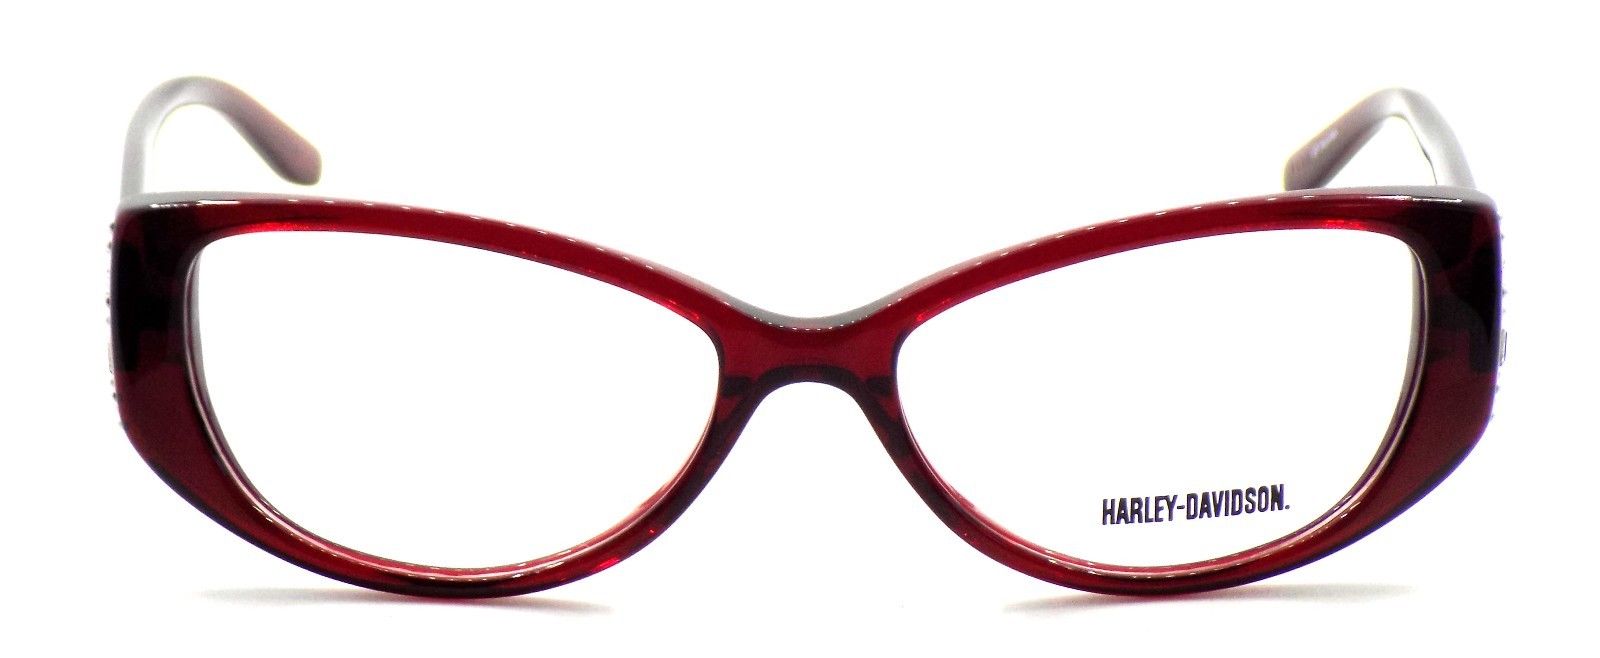 2-Harley Davidson HD514 RD Women's Eyeglasses Frames 51-15-135 Red + CASE-715583766563-IKSpecs